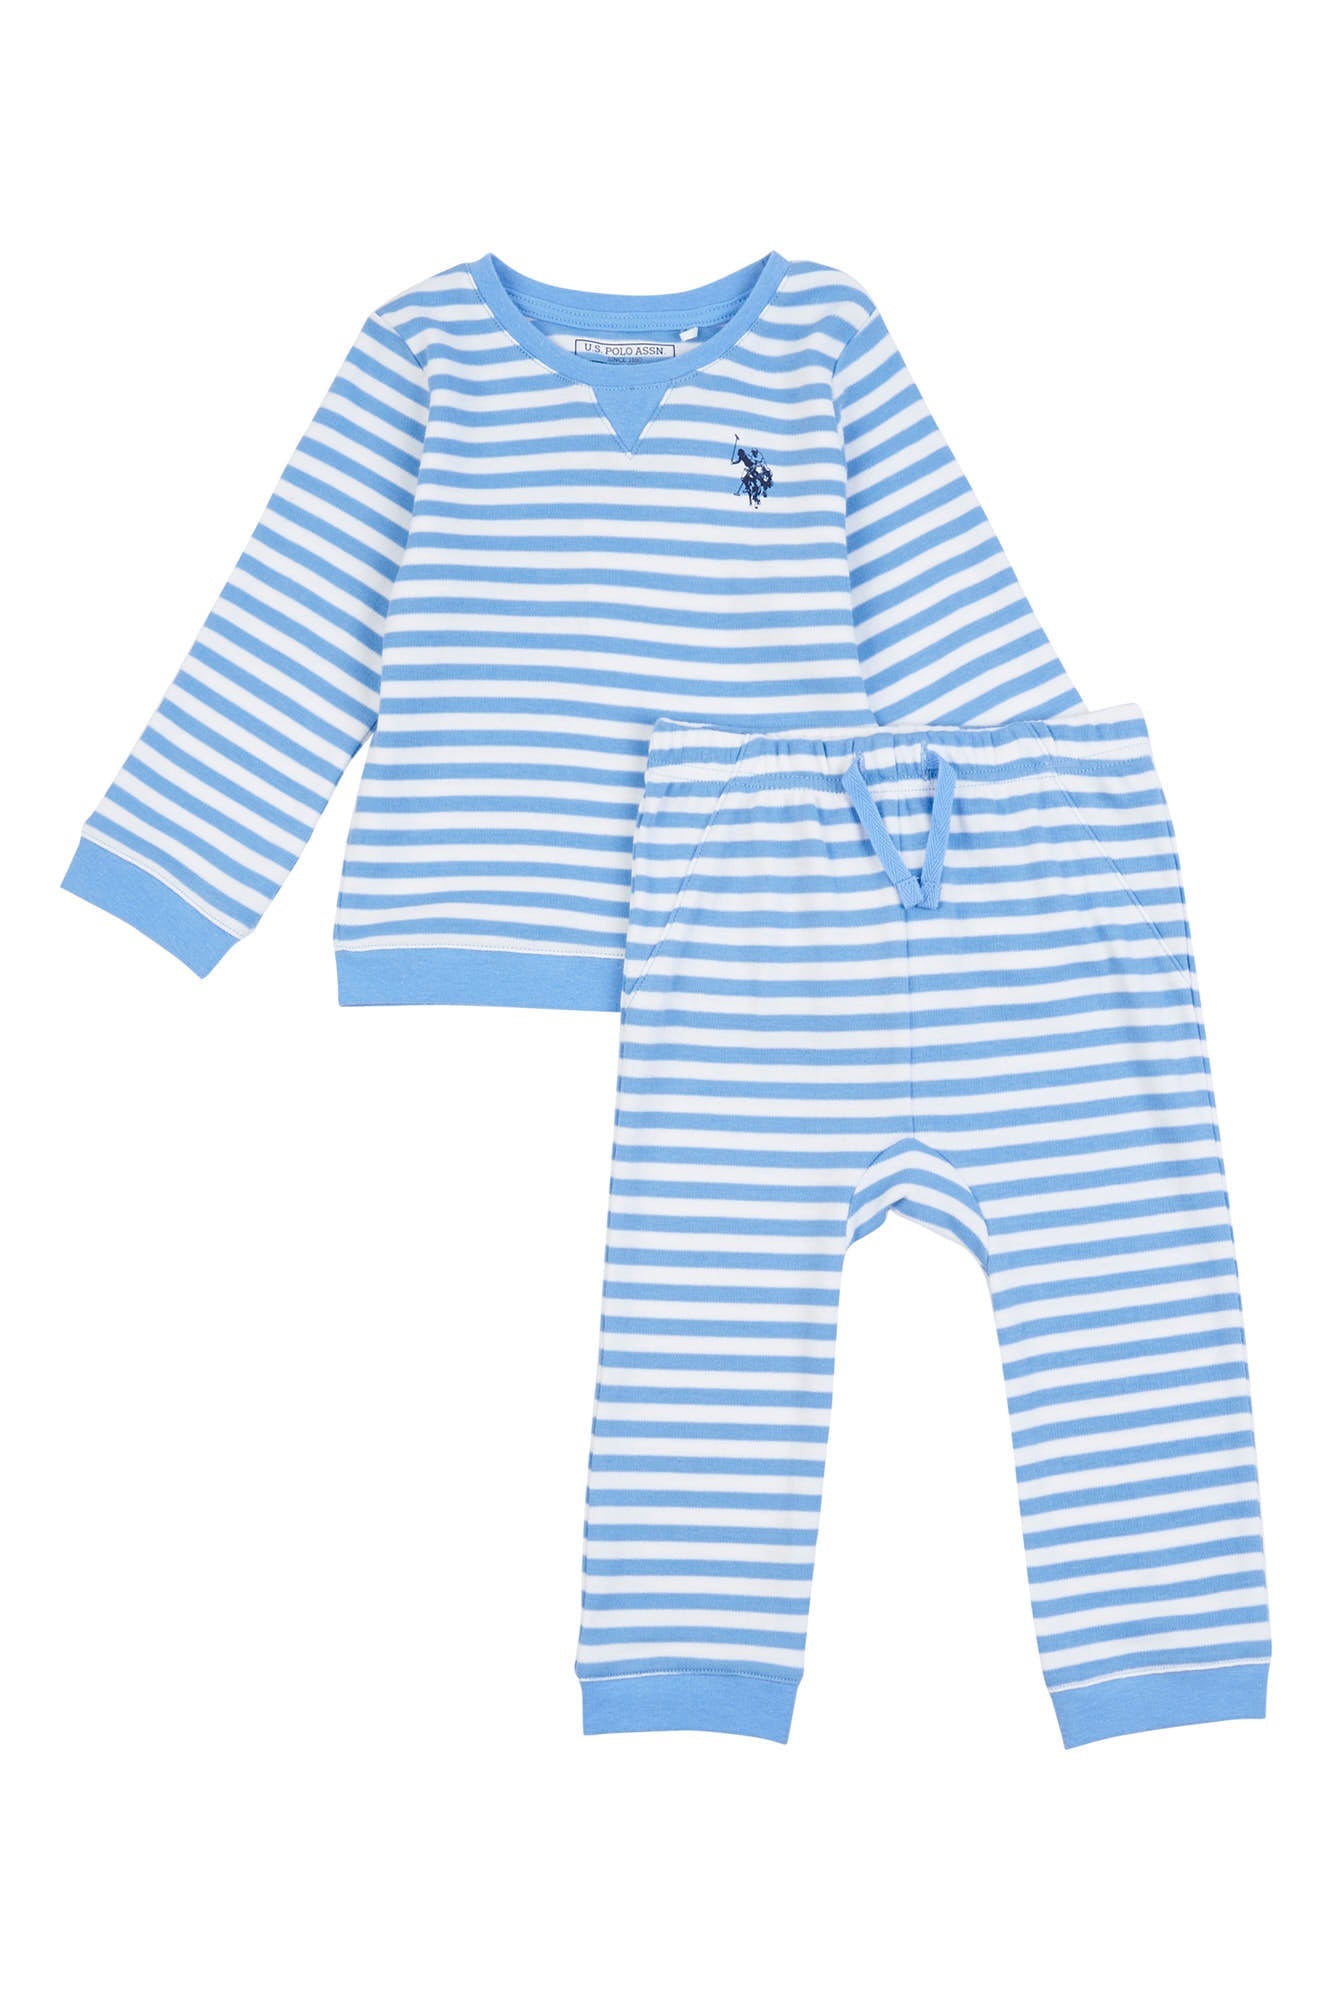 U.S. Polo Assn. Baby Bretton Crew Set in Little Boy Blue